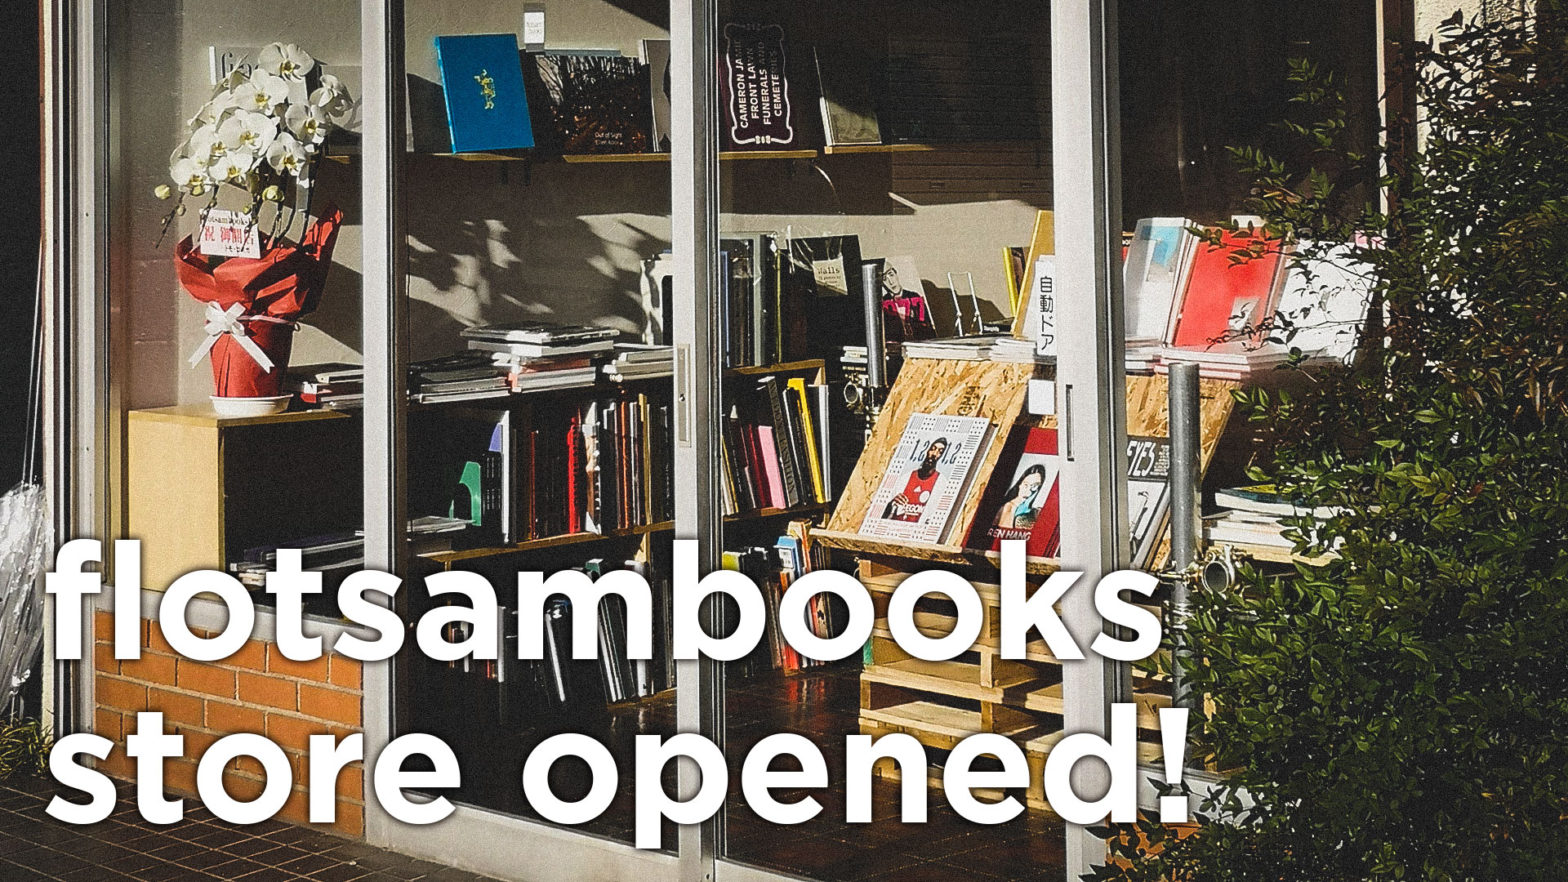 Art book shop “flotsambooks” opens a physical store in Daitabashi!